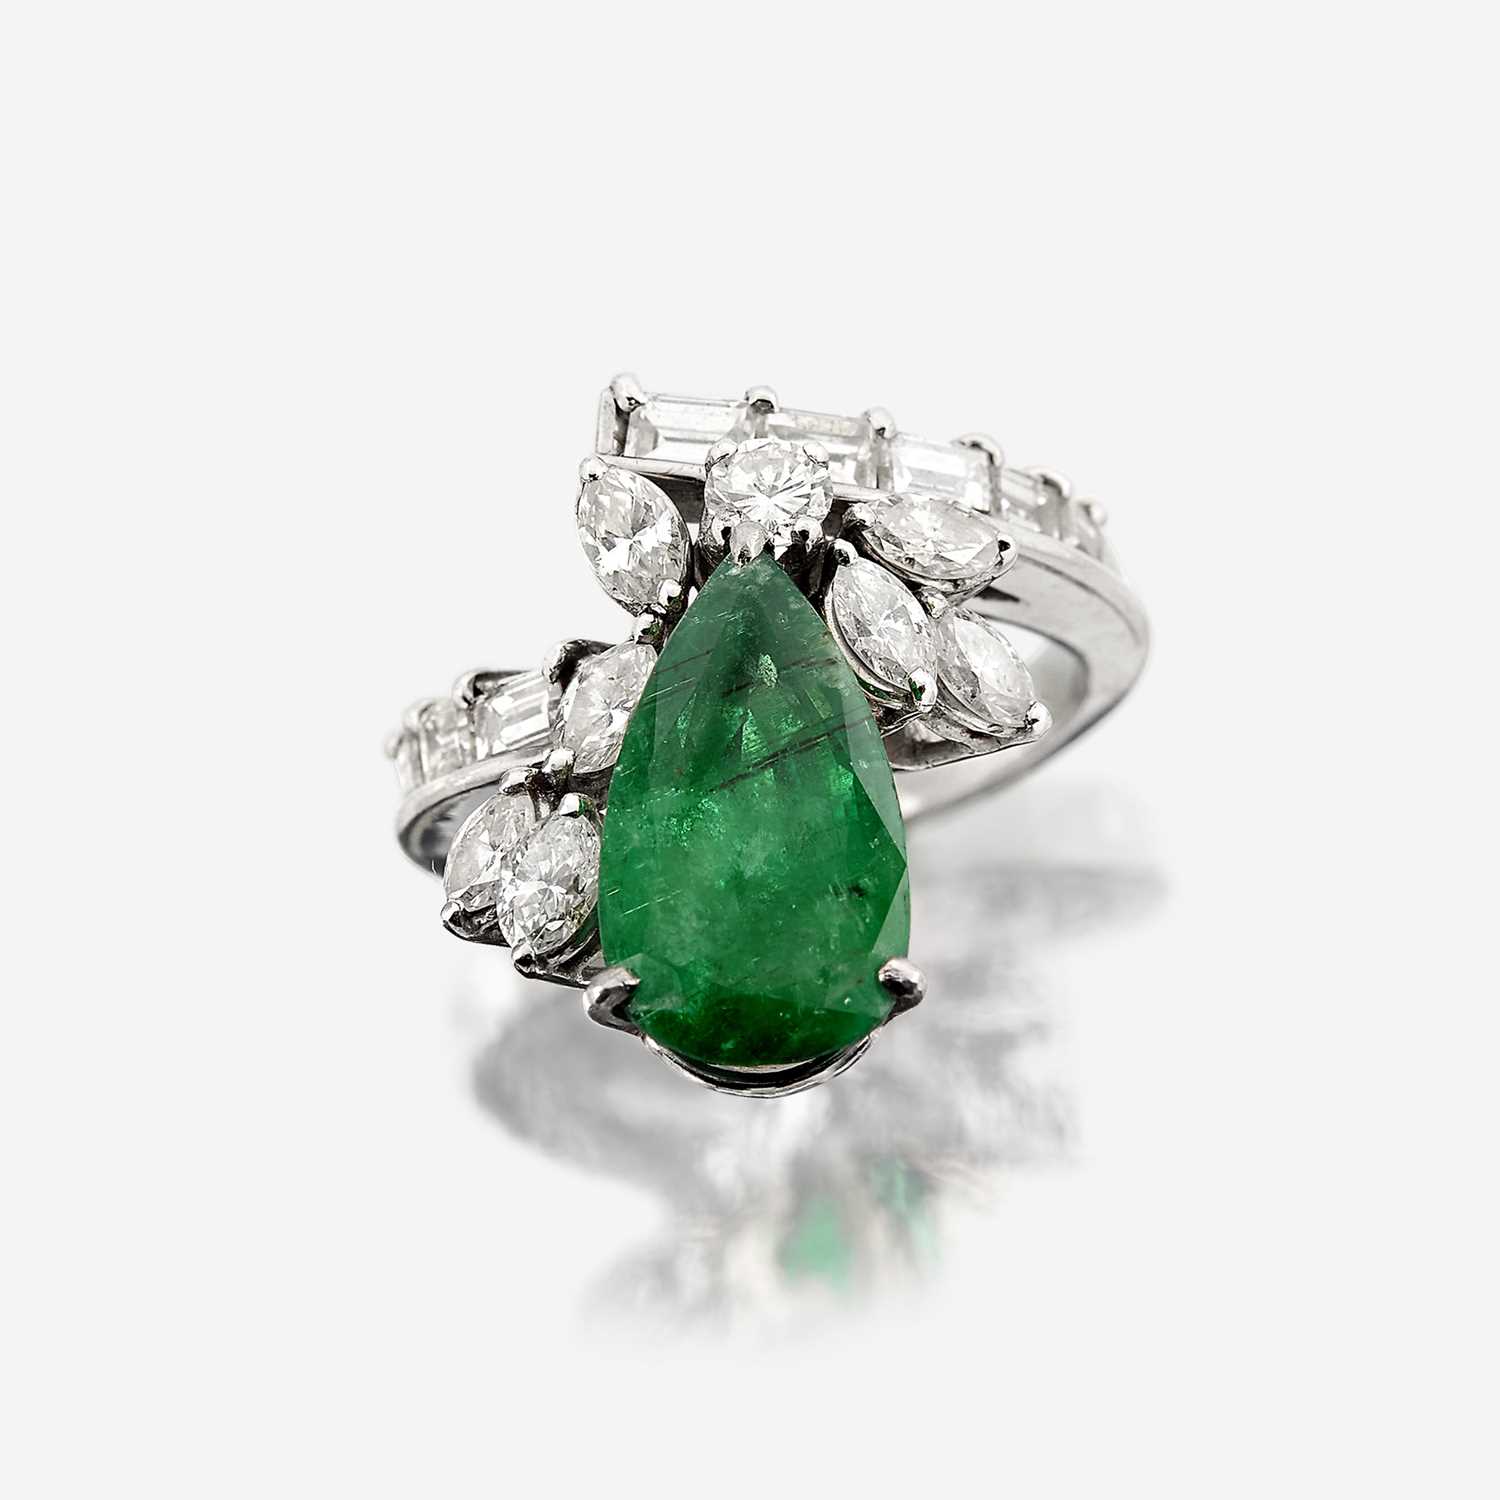 Lot 106 - An emerald, diamond, and fourteen karat white gold ring